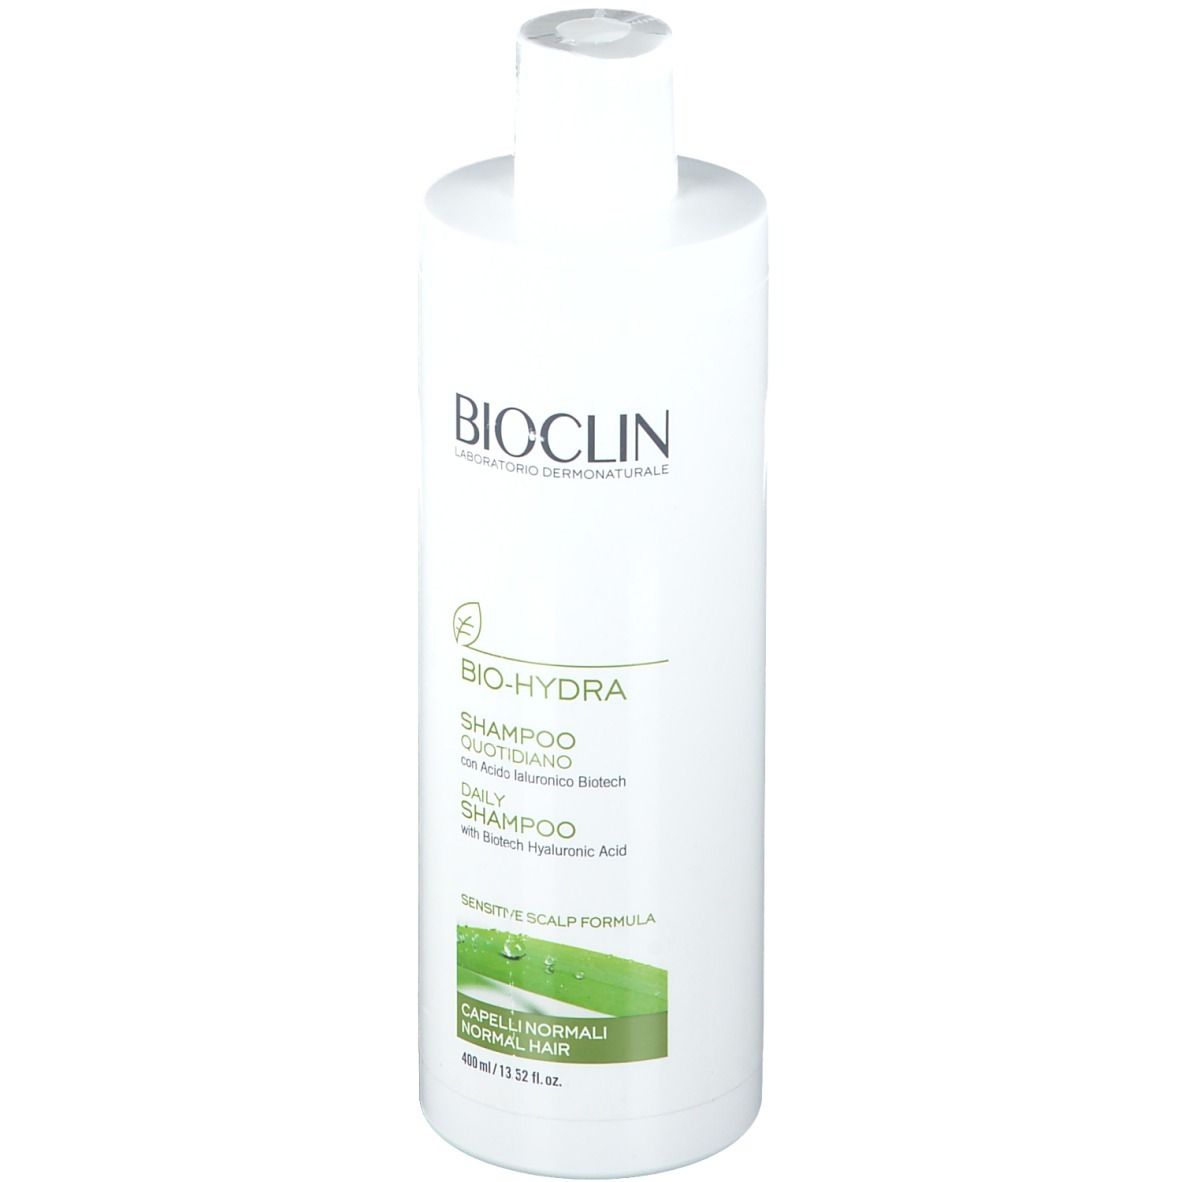 BIOCLIN Bio-Hydra Shampoo Quotidiano 400 ml